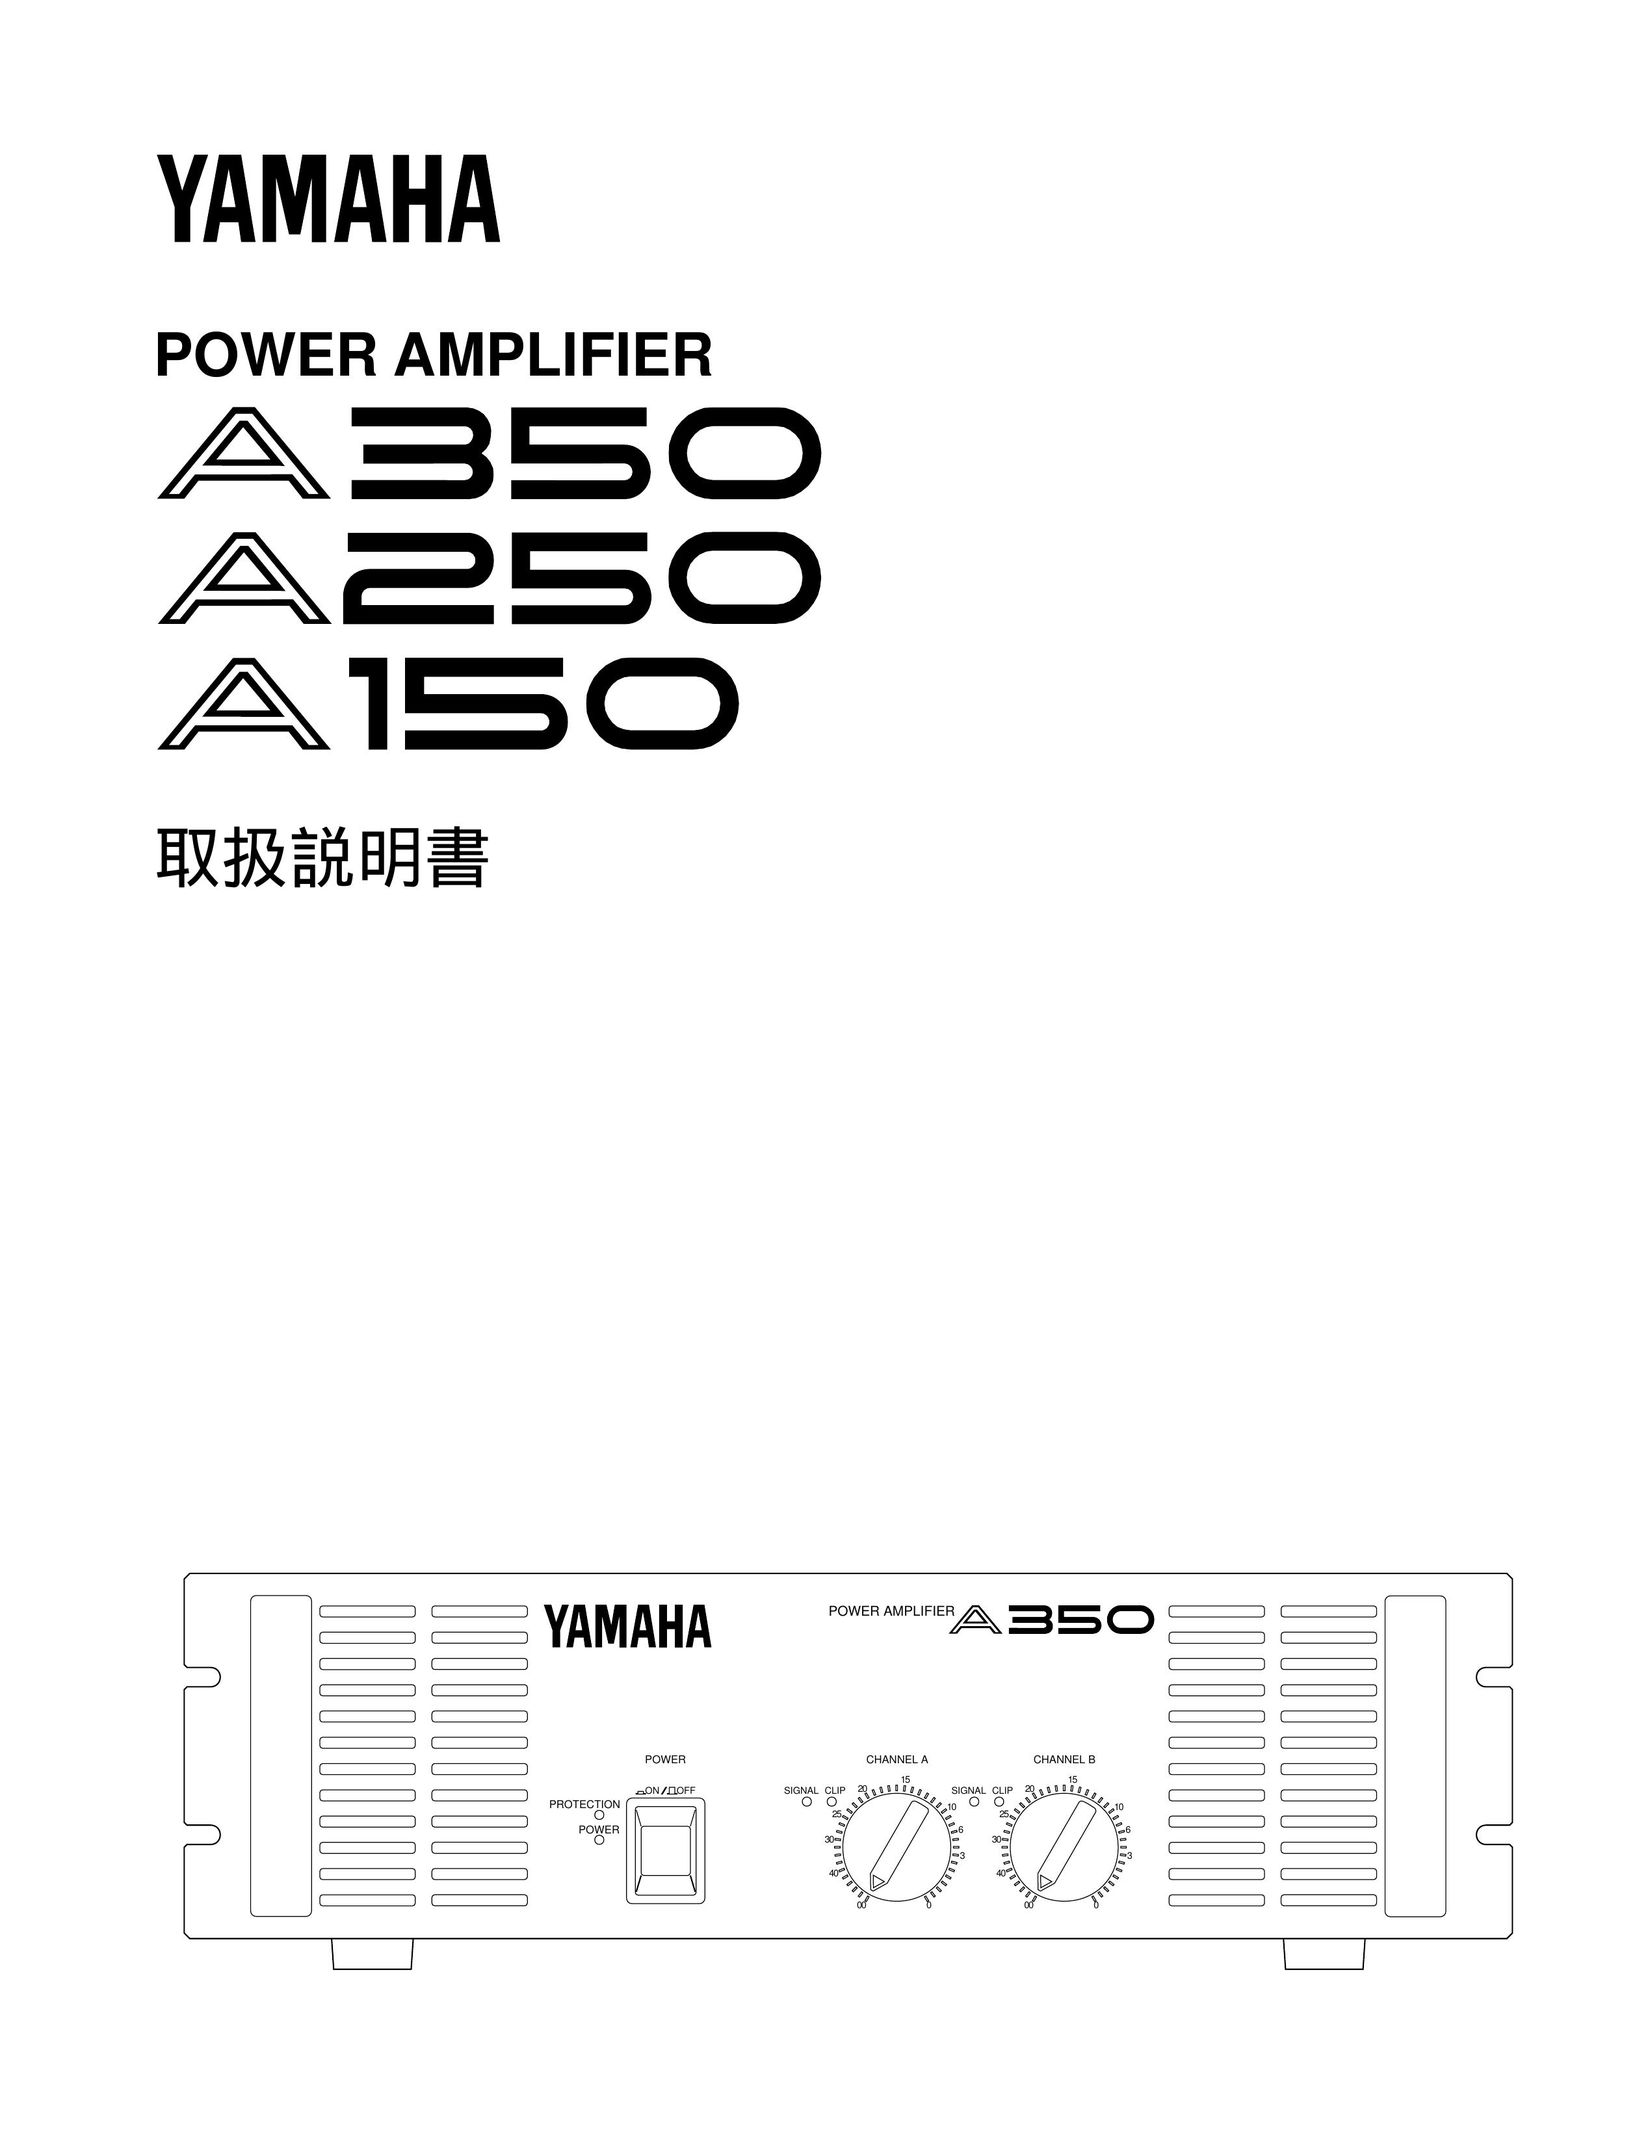 Yamaha A150 Stereo Amplifier User Manual